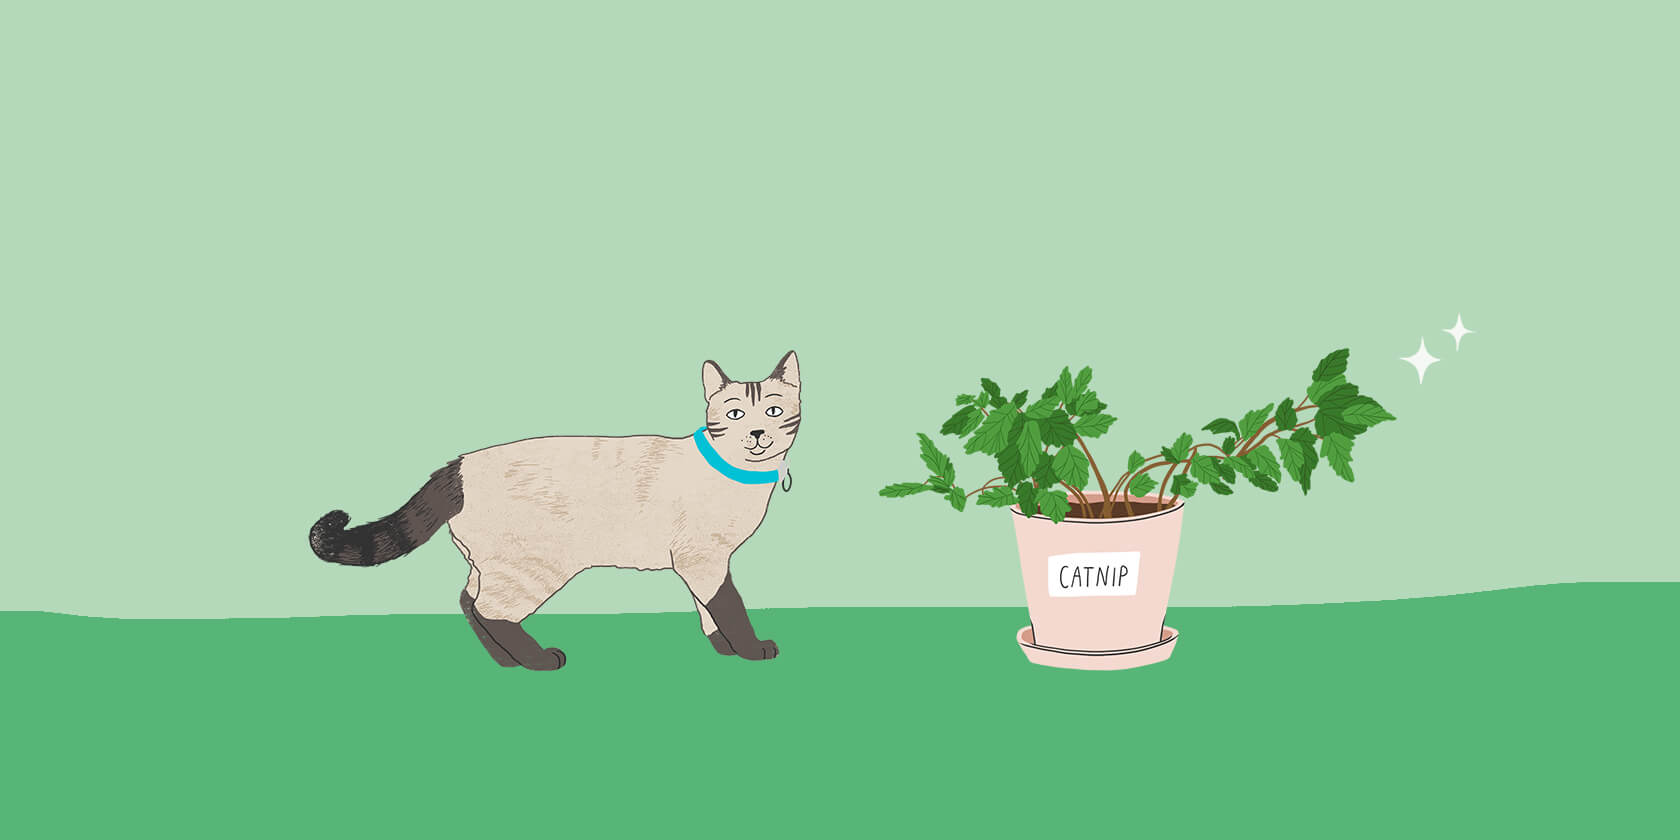 Cat next to a catnip plant